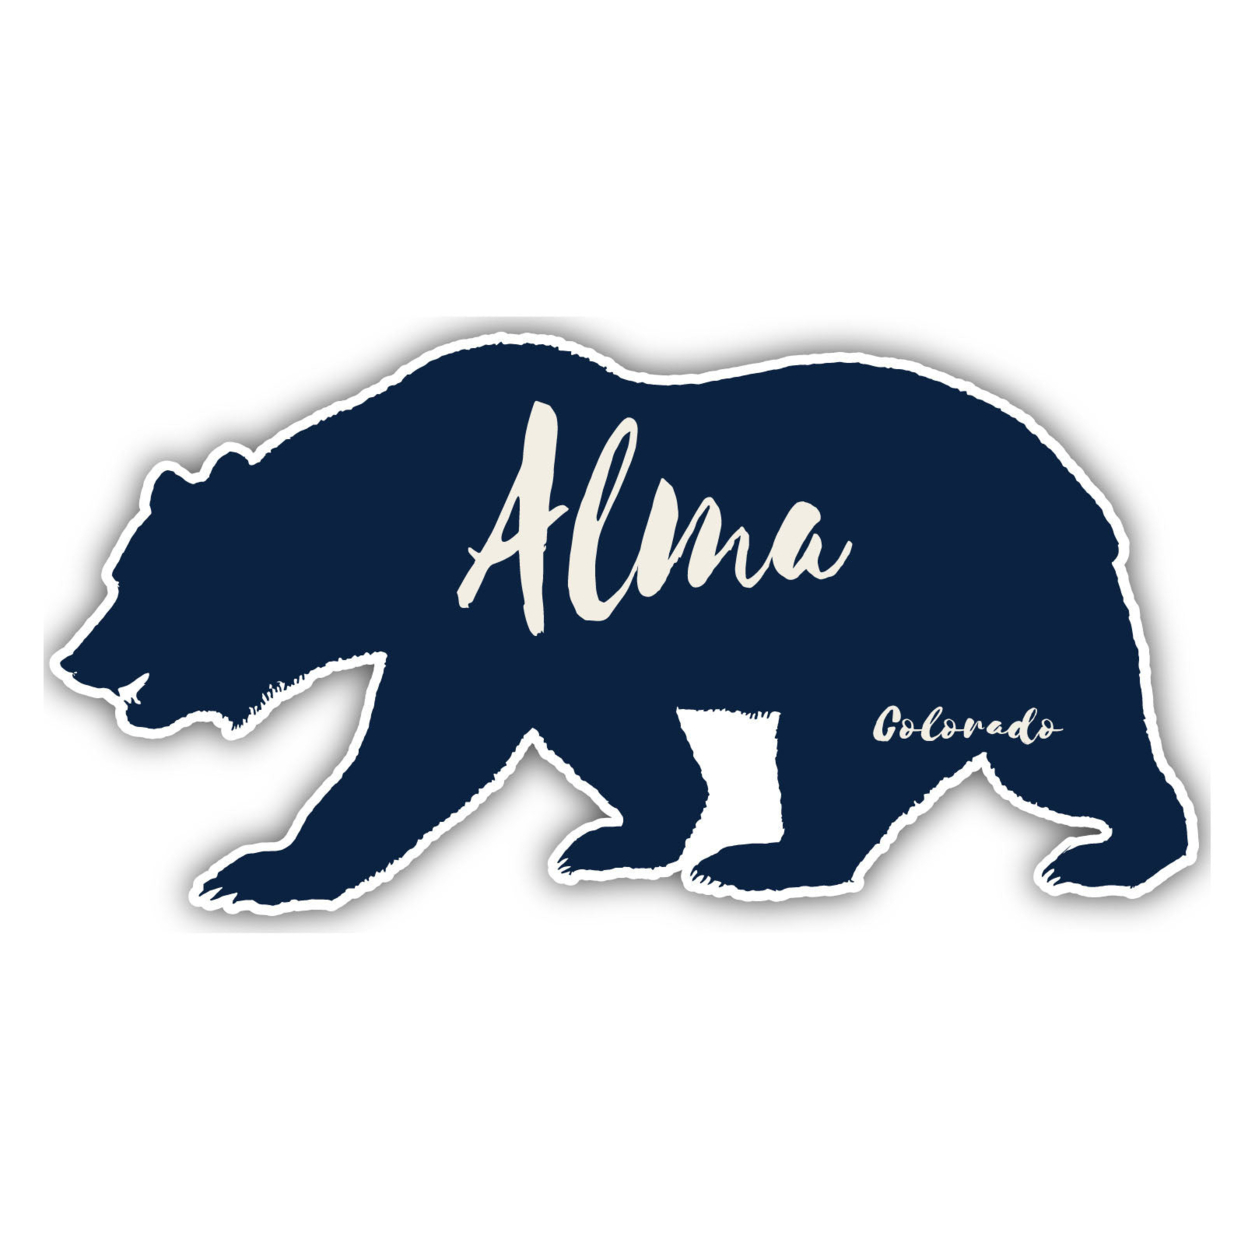 Alma Colorado Souvenir Decorative Stickers (Choose Theme And Size) - 4-Pack, 2-Inch, Adventures Awaits